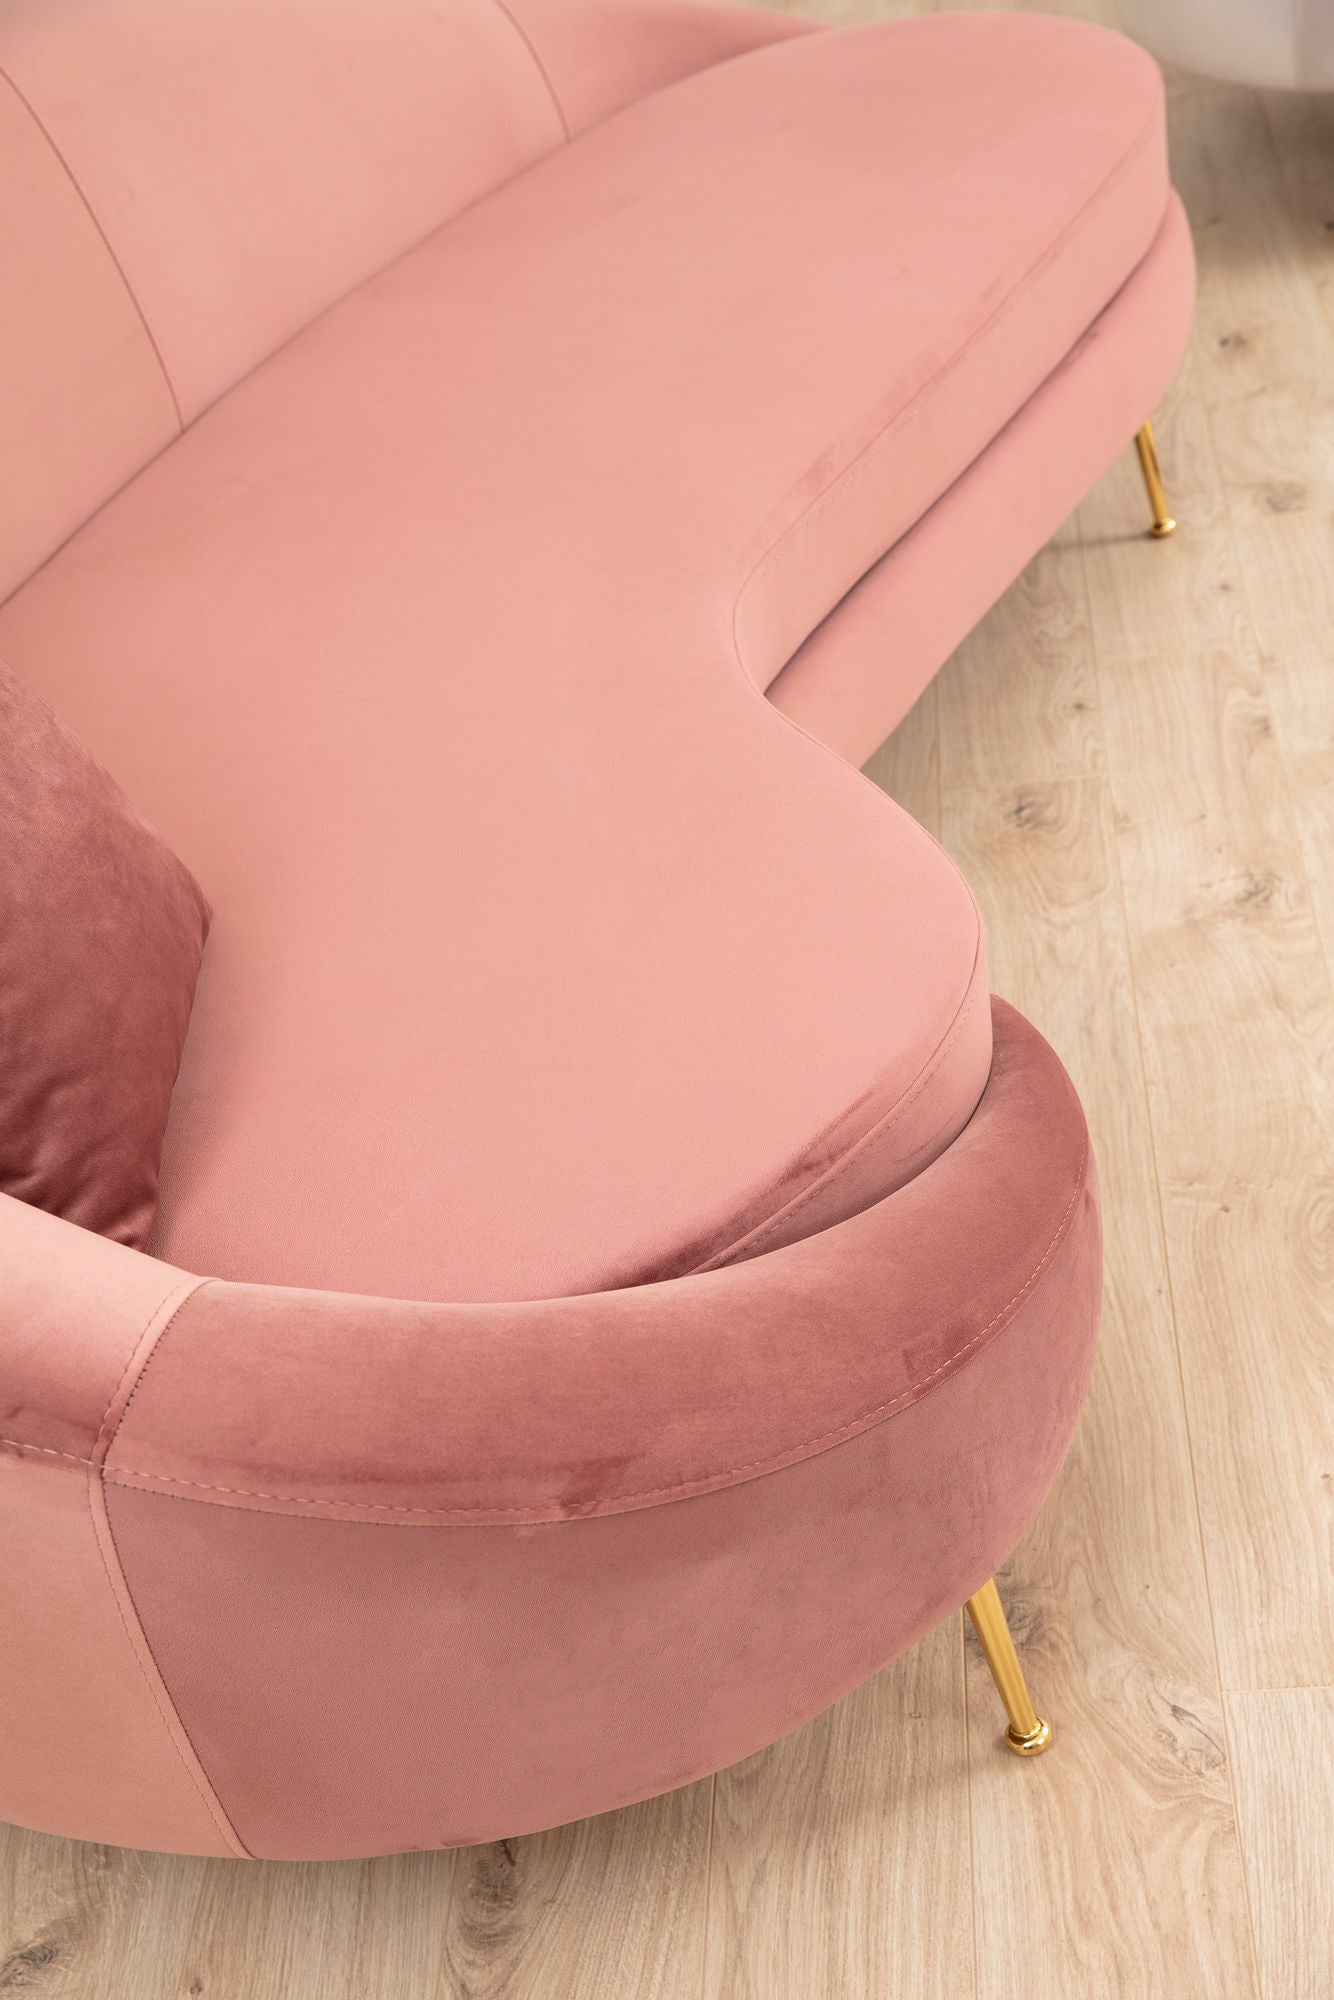 Eses venstre - Pink - 3-sæders sofa